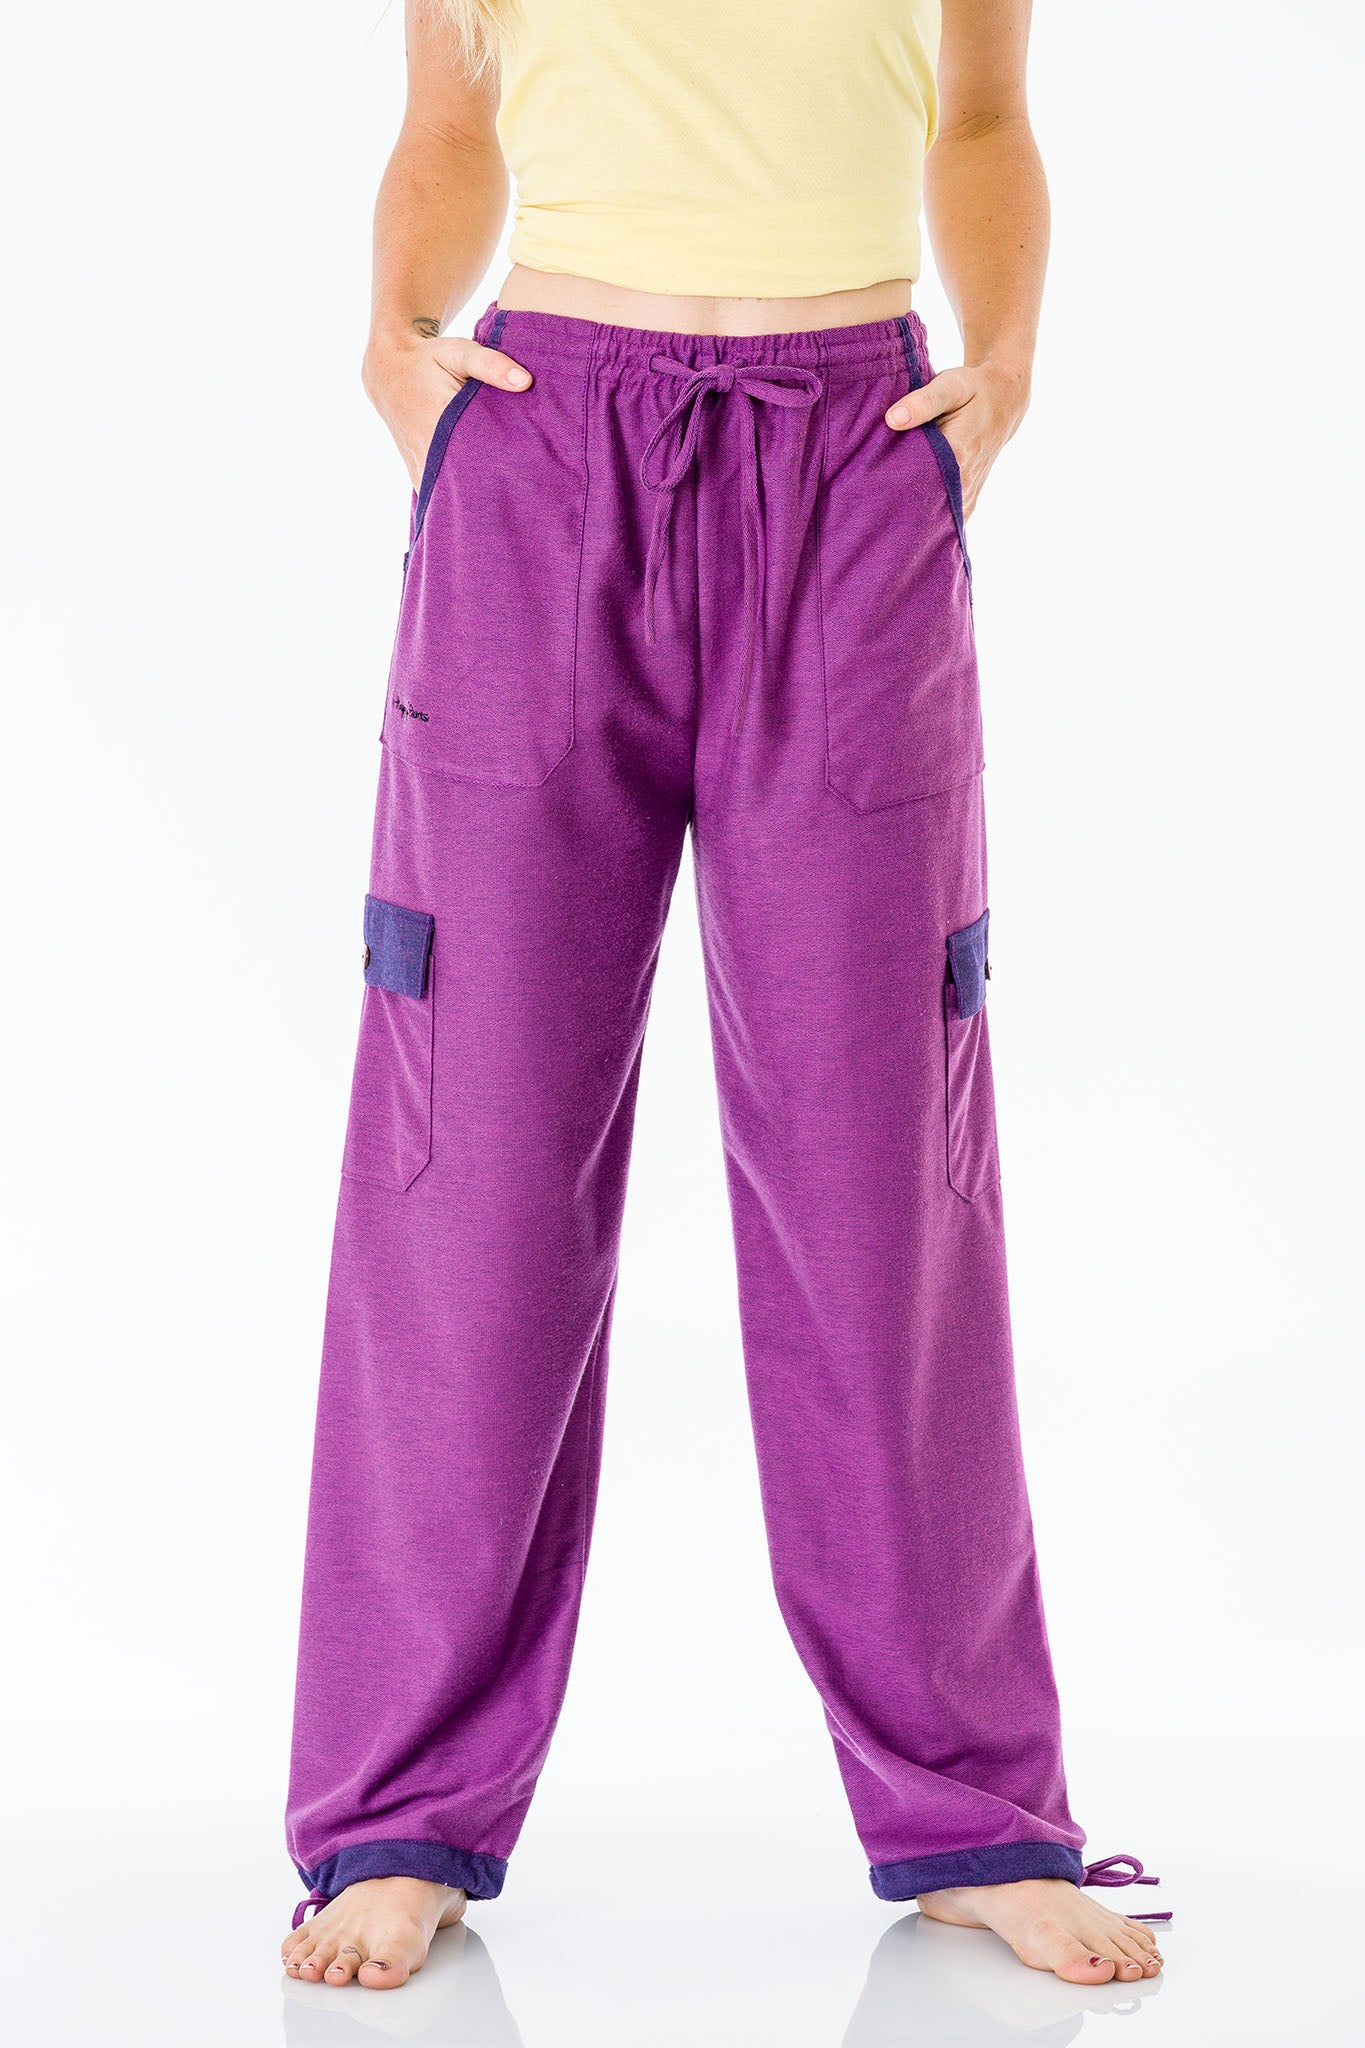 Amethyst Purple Pants - Happy Pants